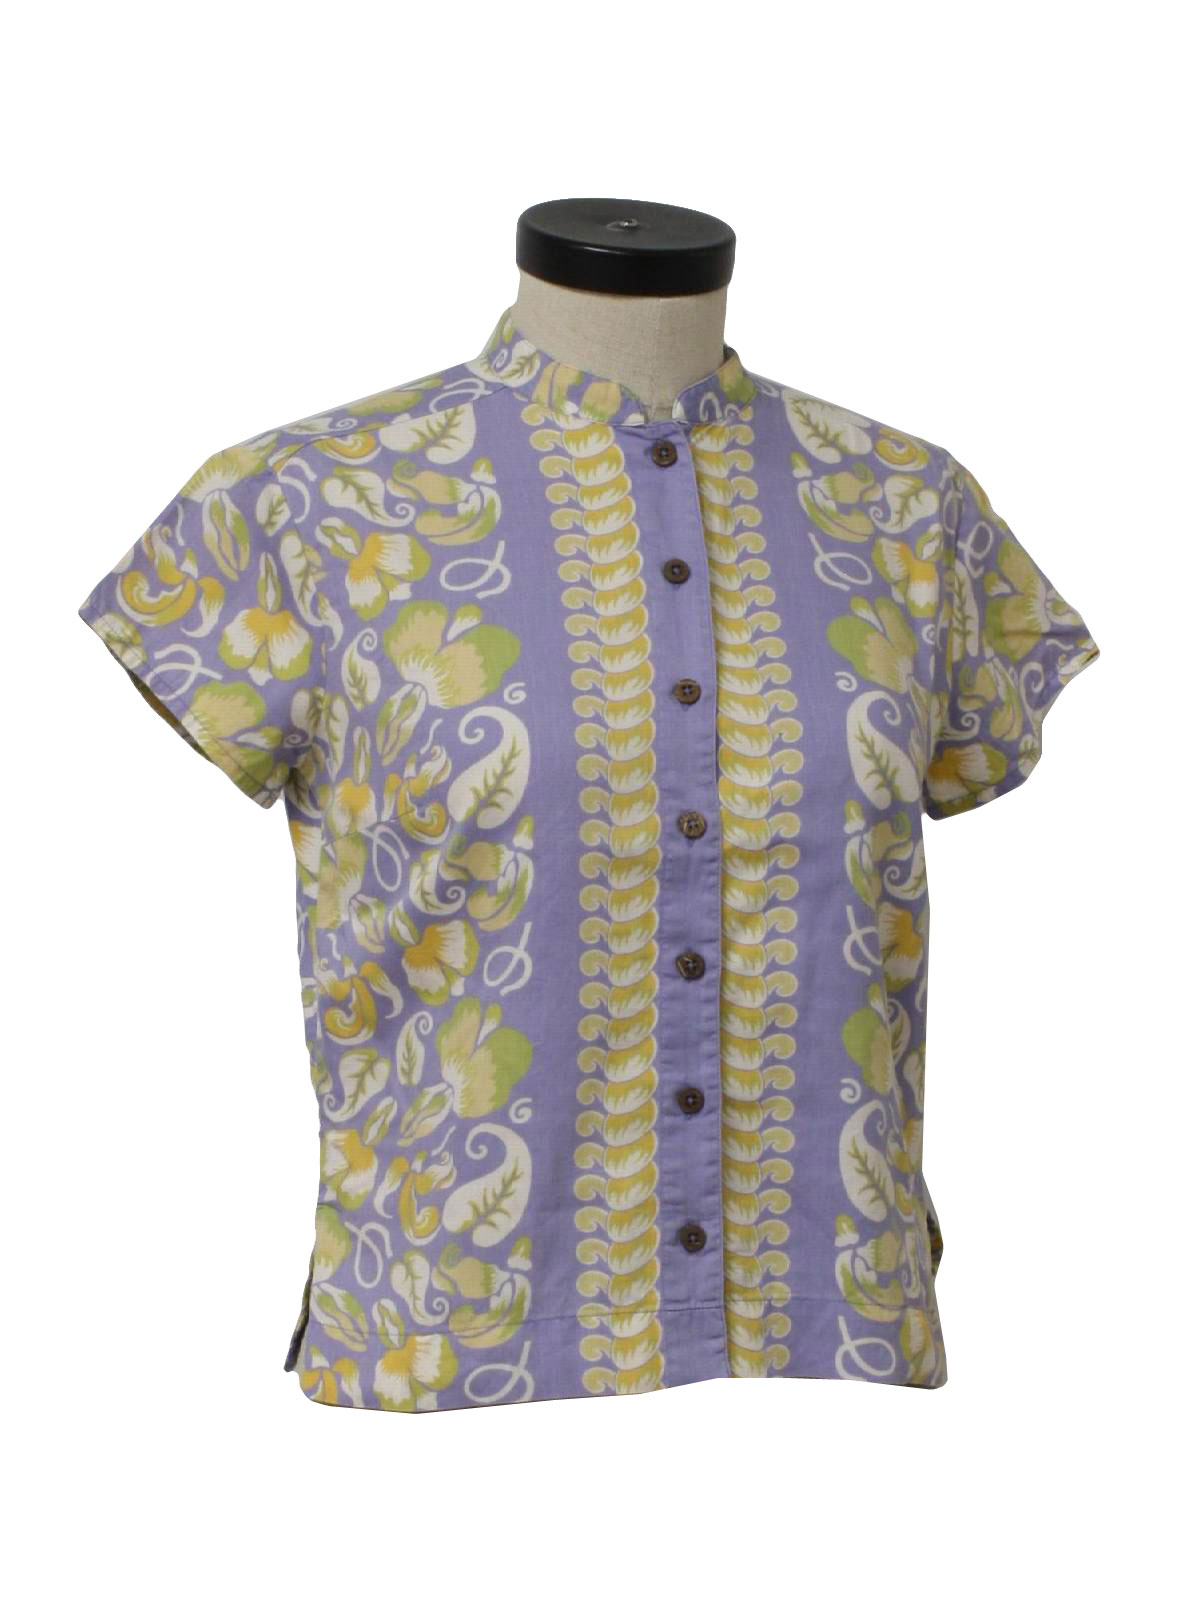 Pataloha 1980s Vintage Hawaiian Shirt: 80s -Pataloha- Womens lavender